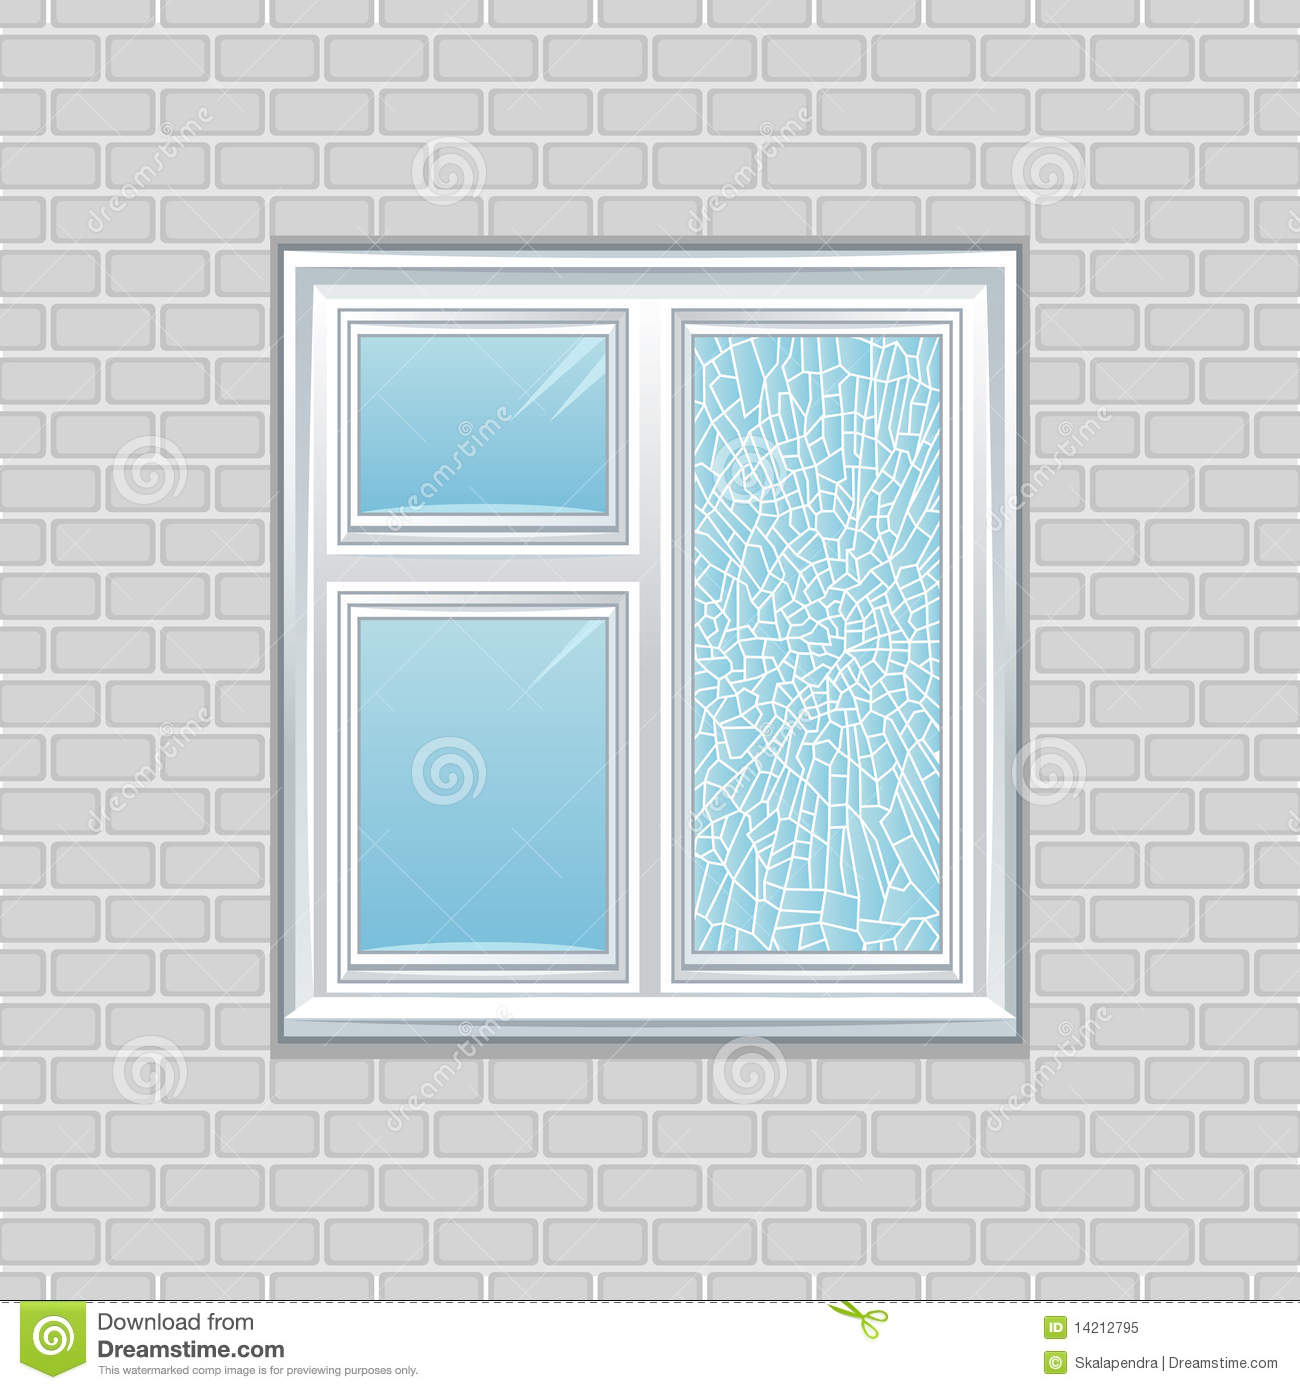 cplex crack for window